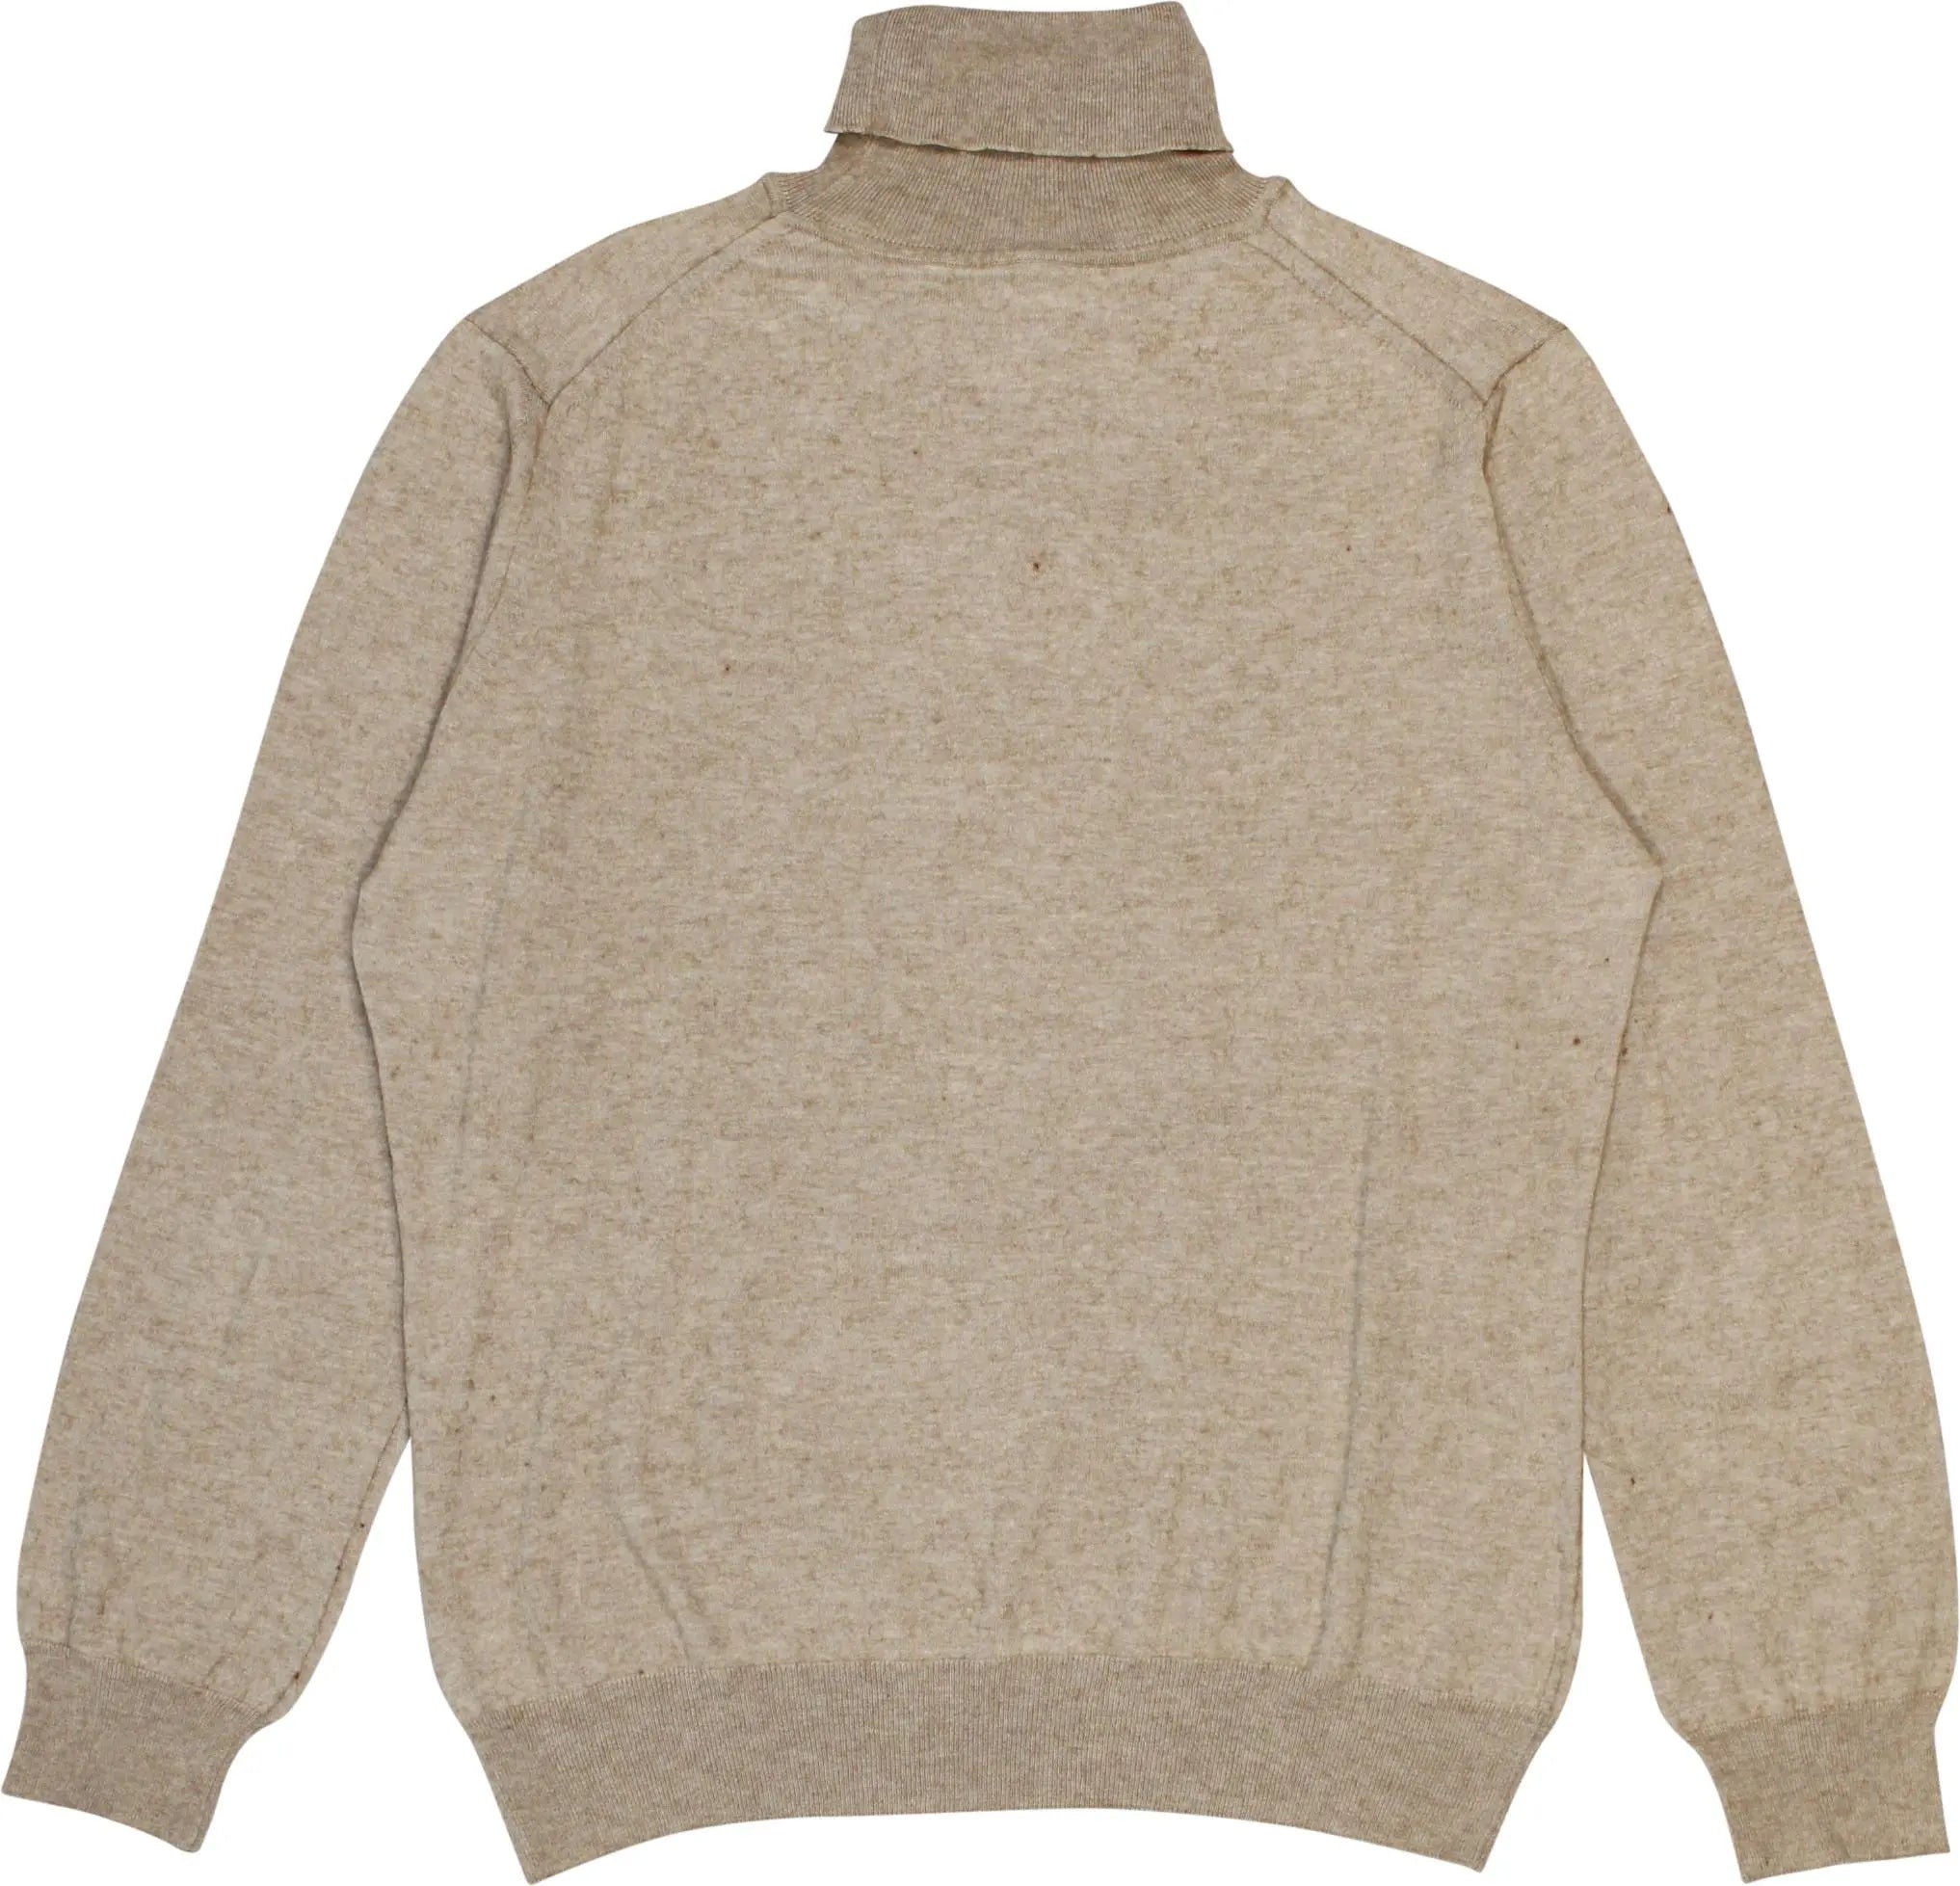 März - Turtleneck Sweater- ThriftTale.com - Vintage and second handclothing